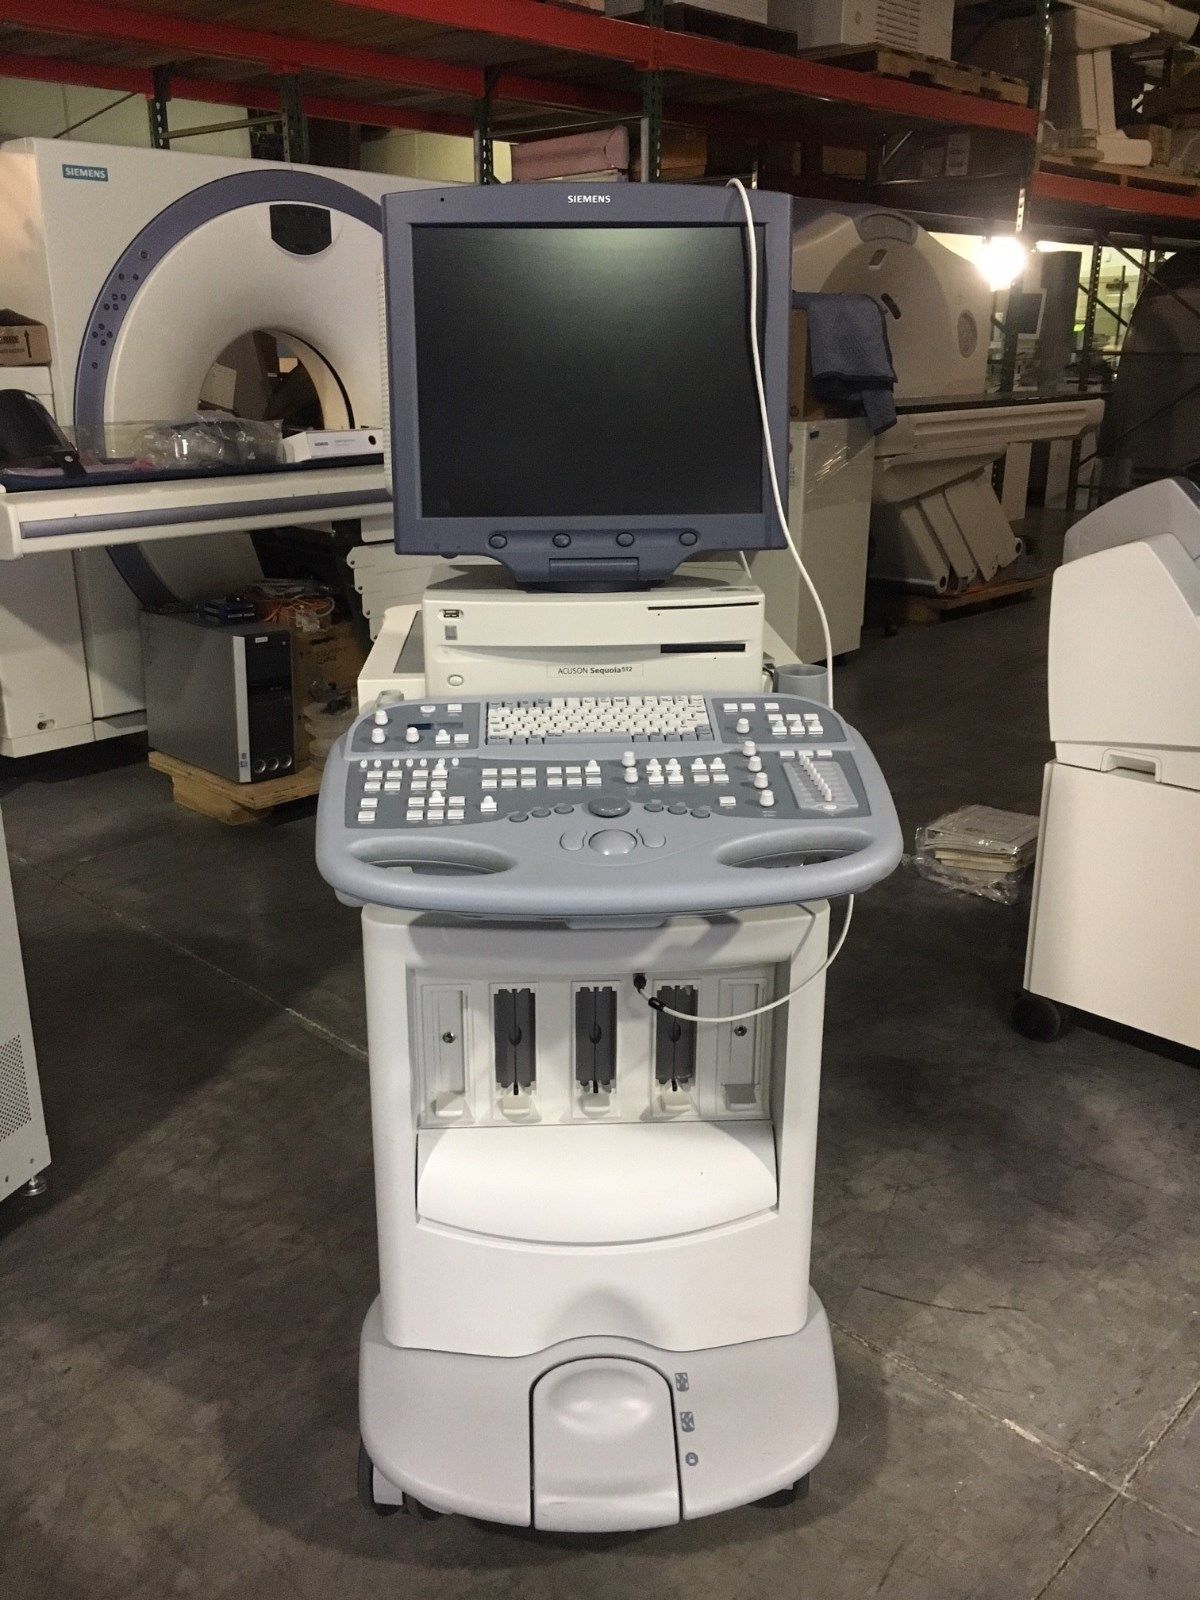 ACUSON Ultrasound SEQUOIA 512 DIAGNOSTIC ULTRASOUND MACHINES FOR SALE